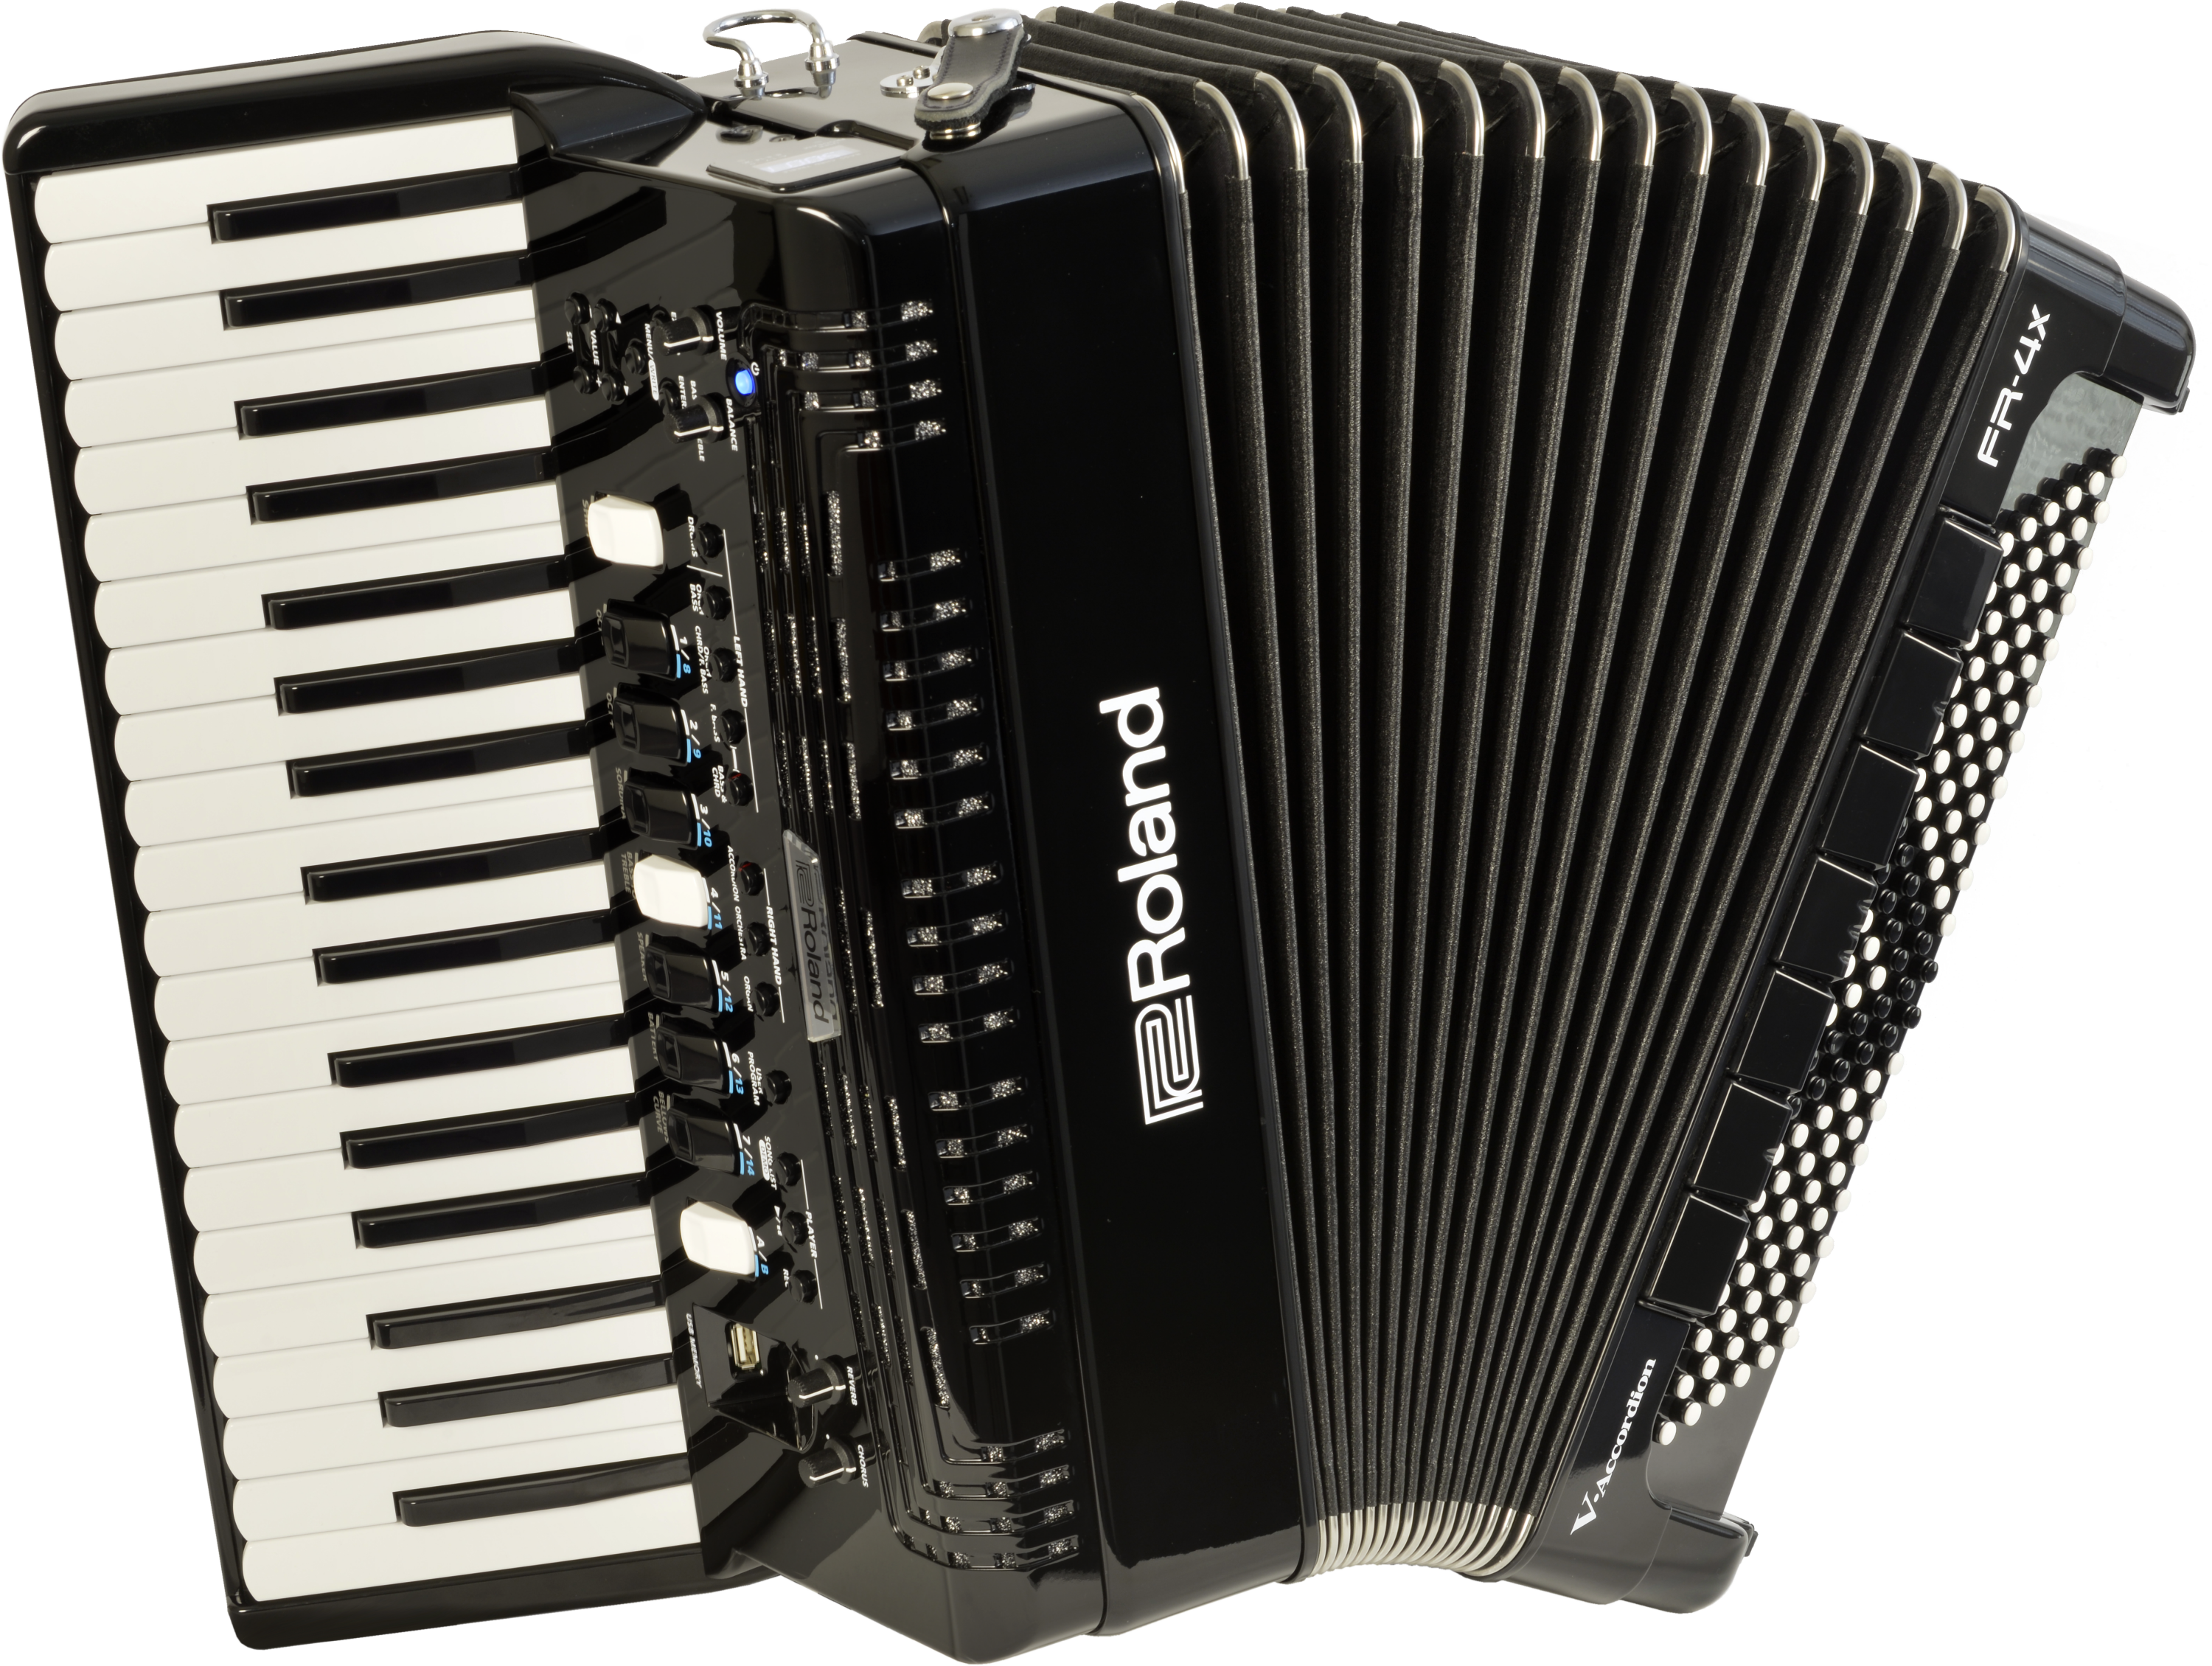 Roland FR-4x piano v-accordion